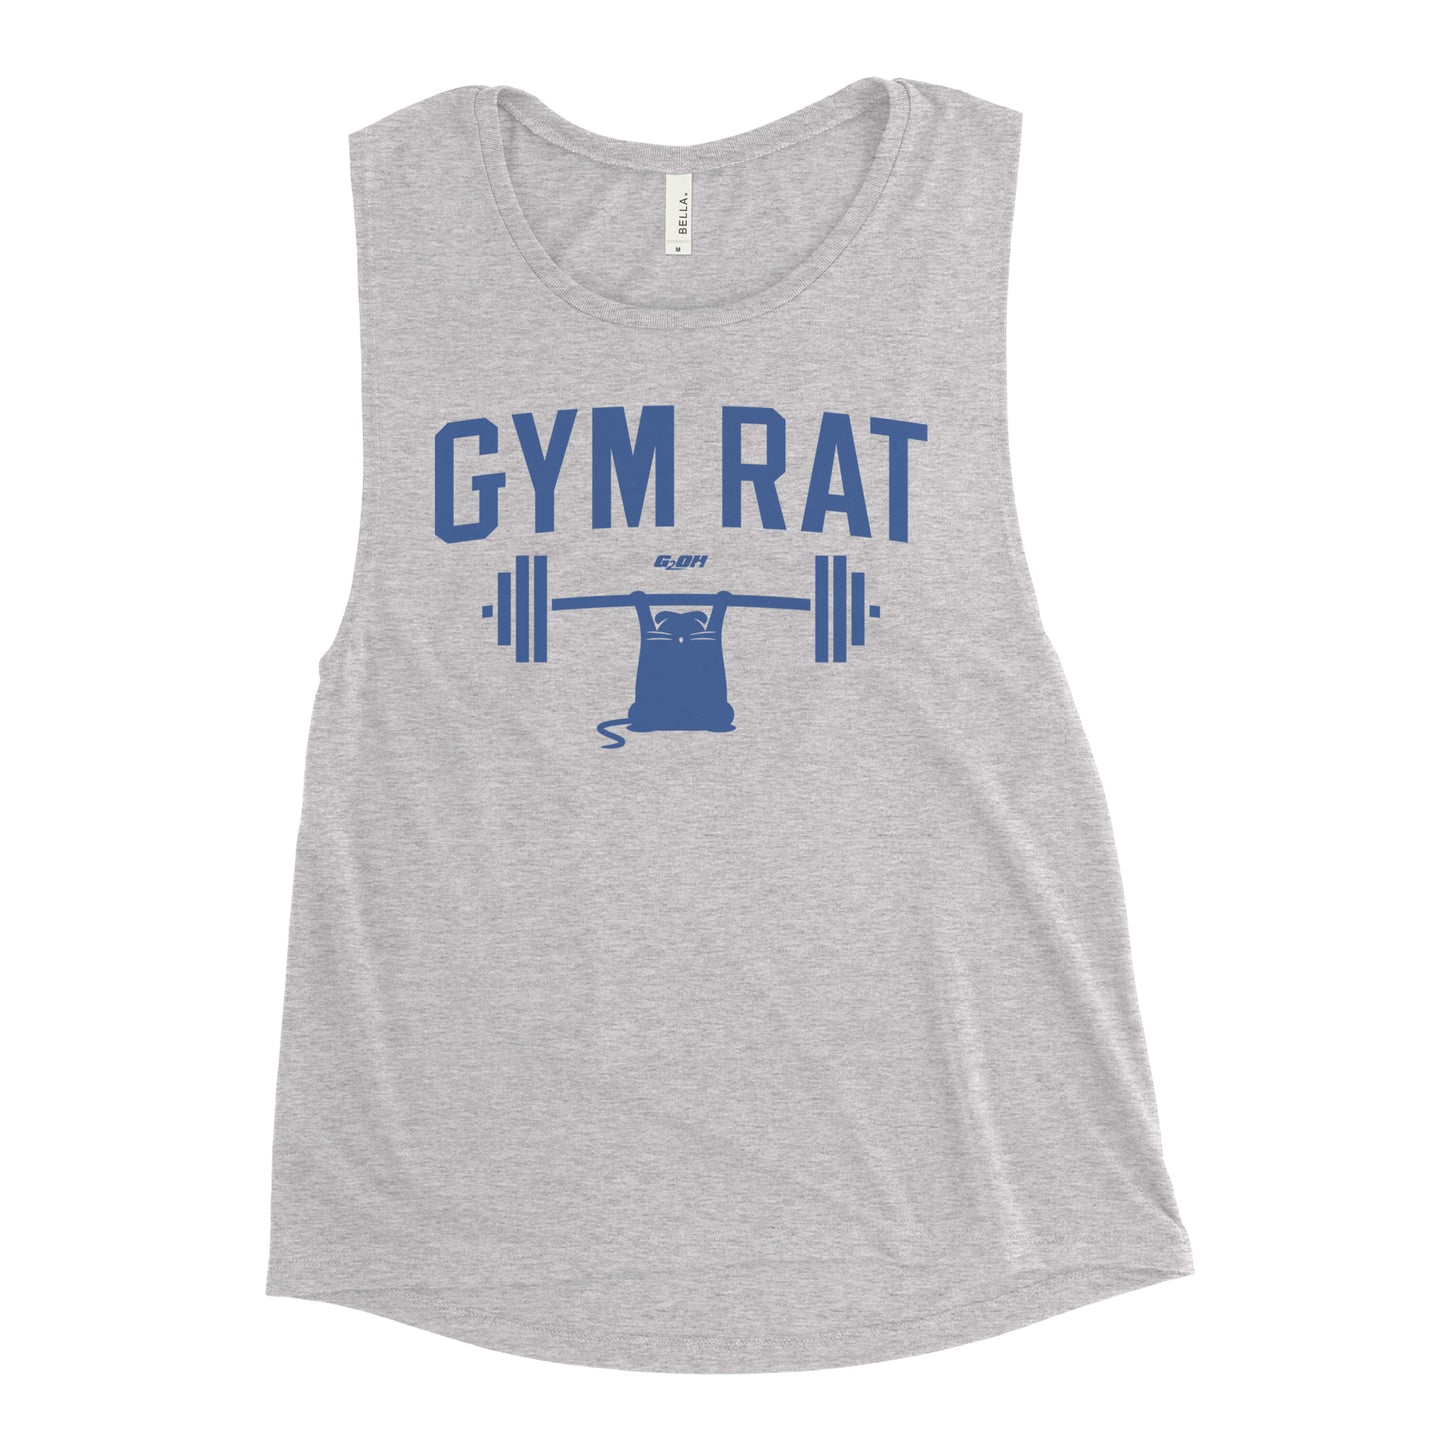 Gym Rat Women's Muscle Tank